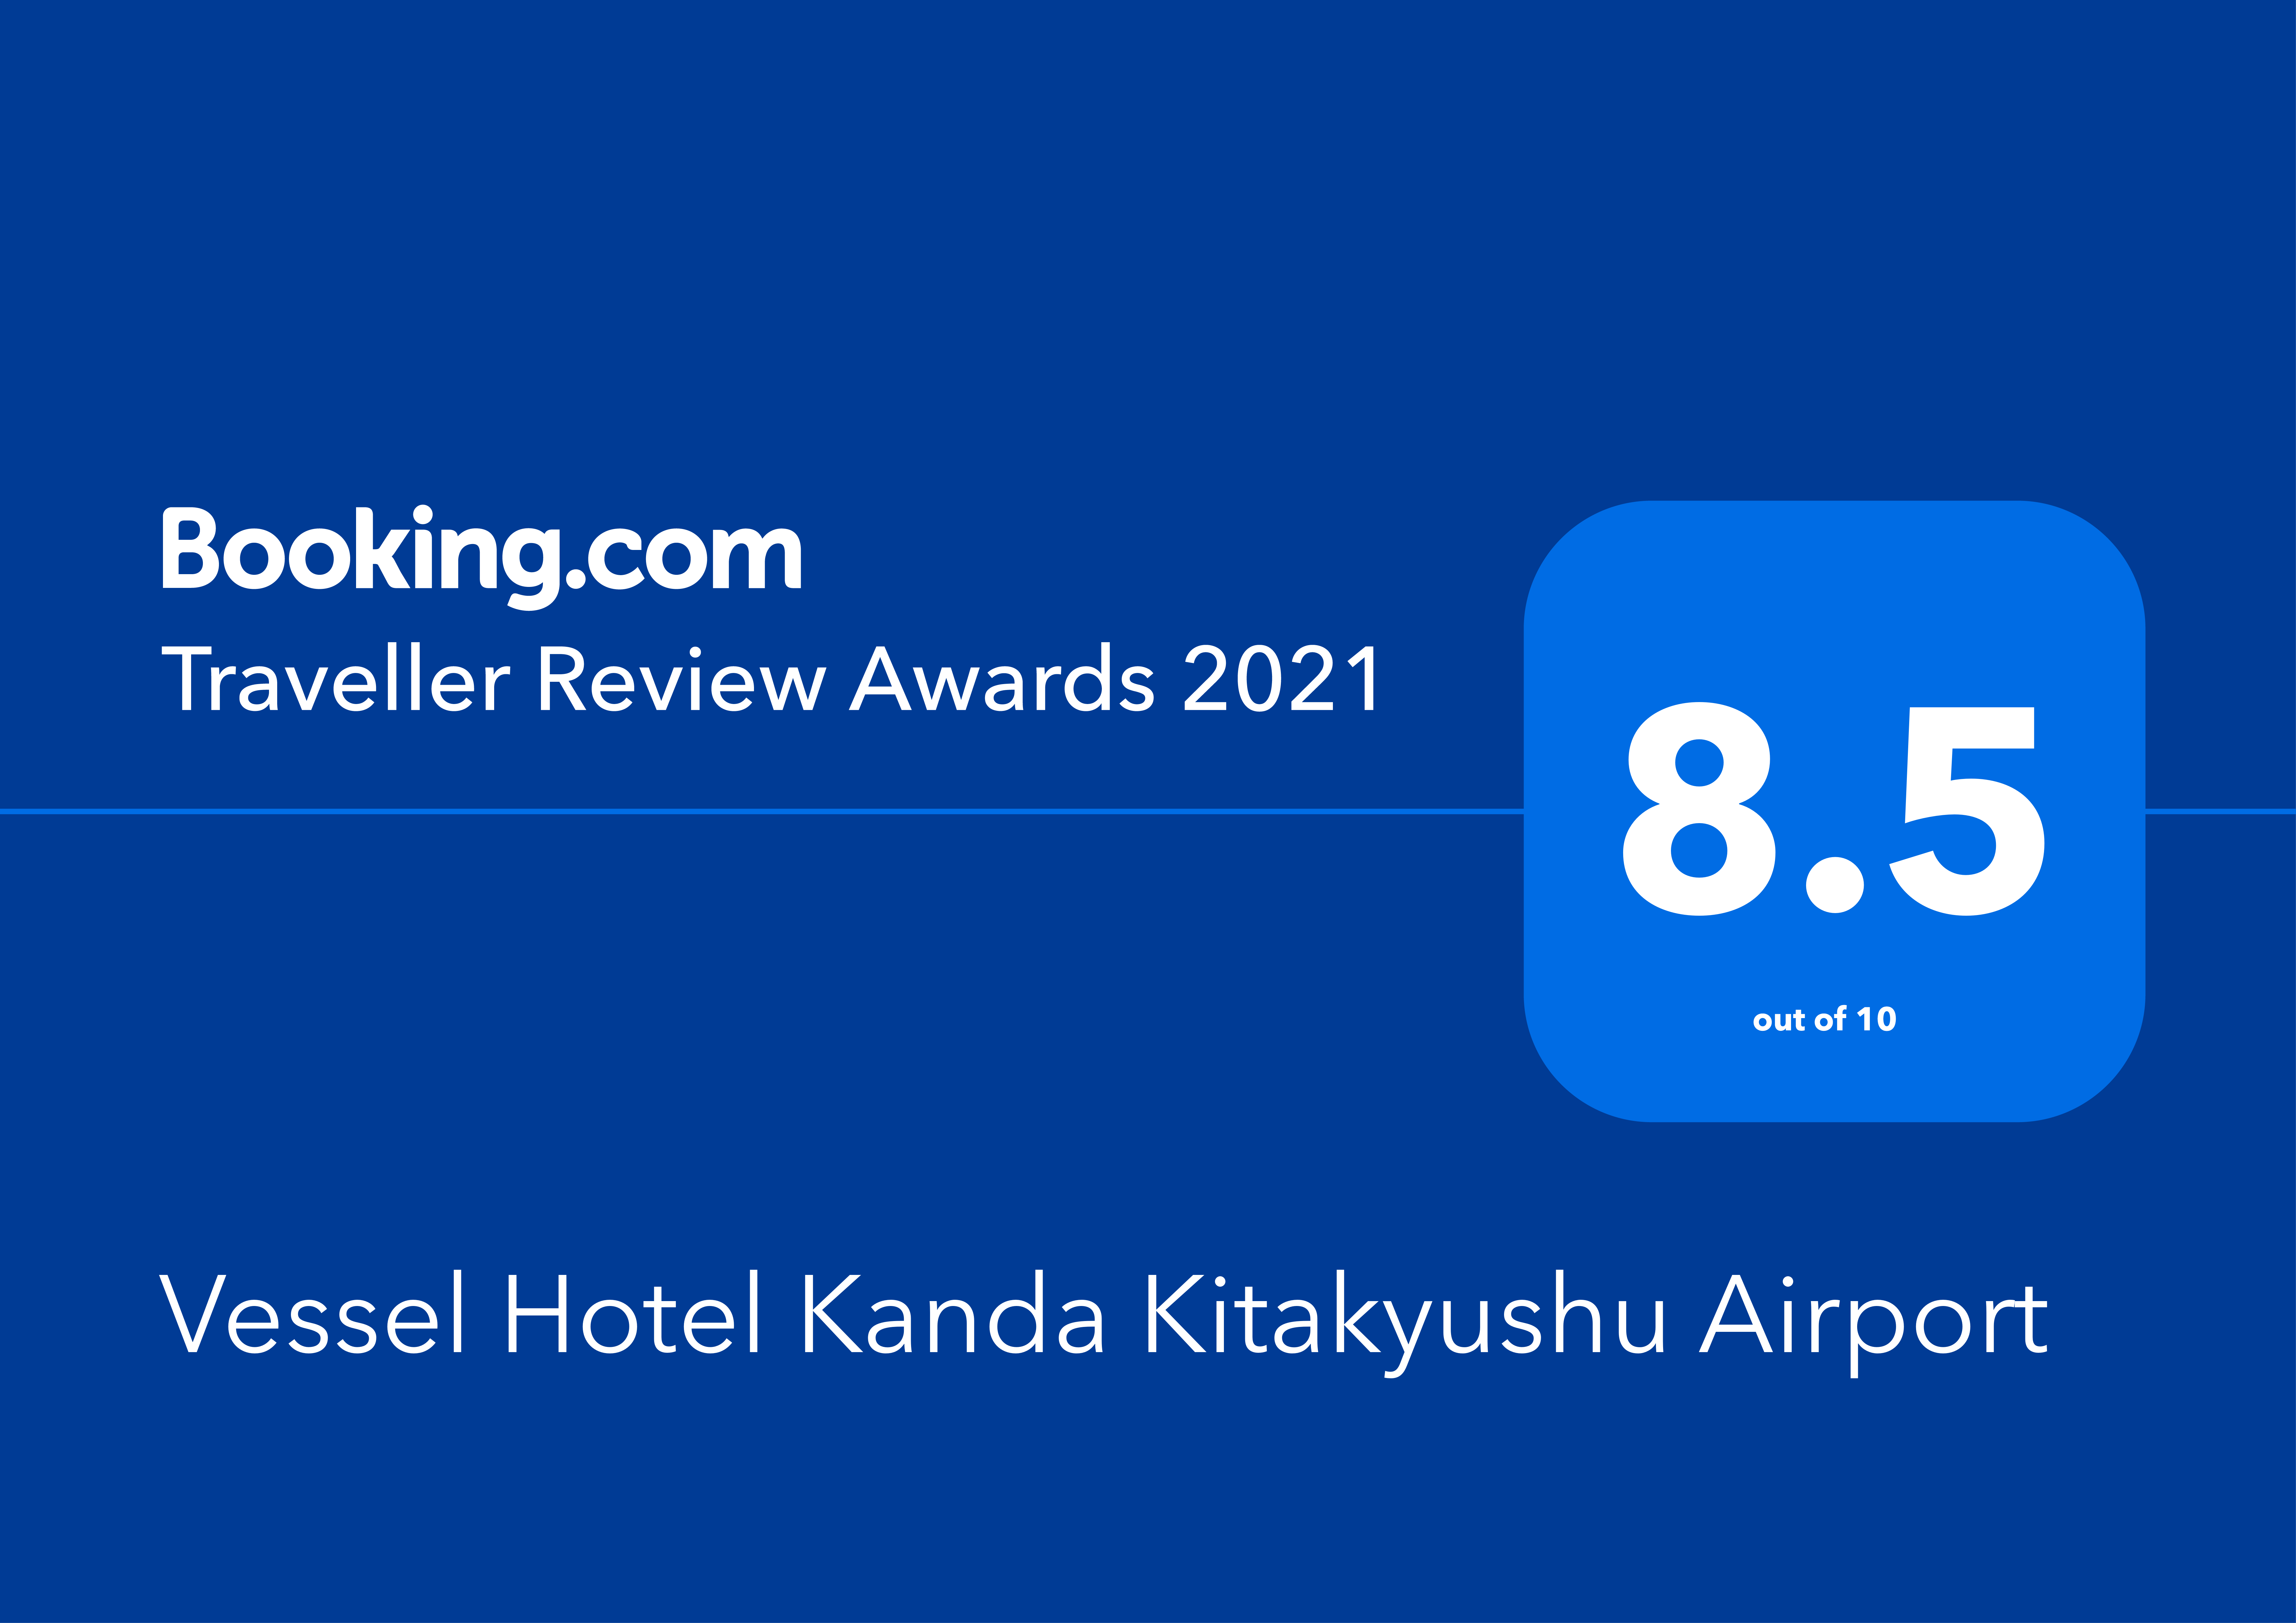 Booking.com“ 2021年旅行者評論獎”獲得者